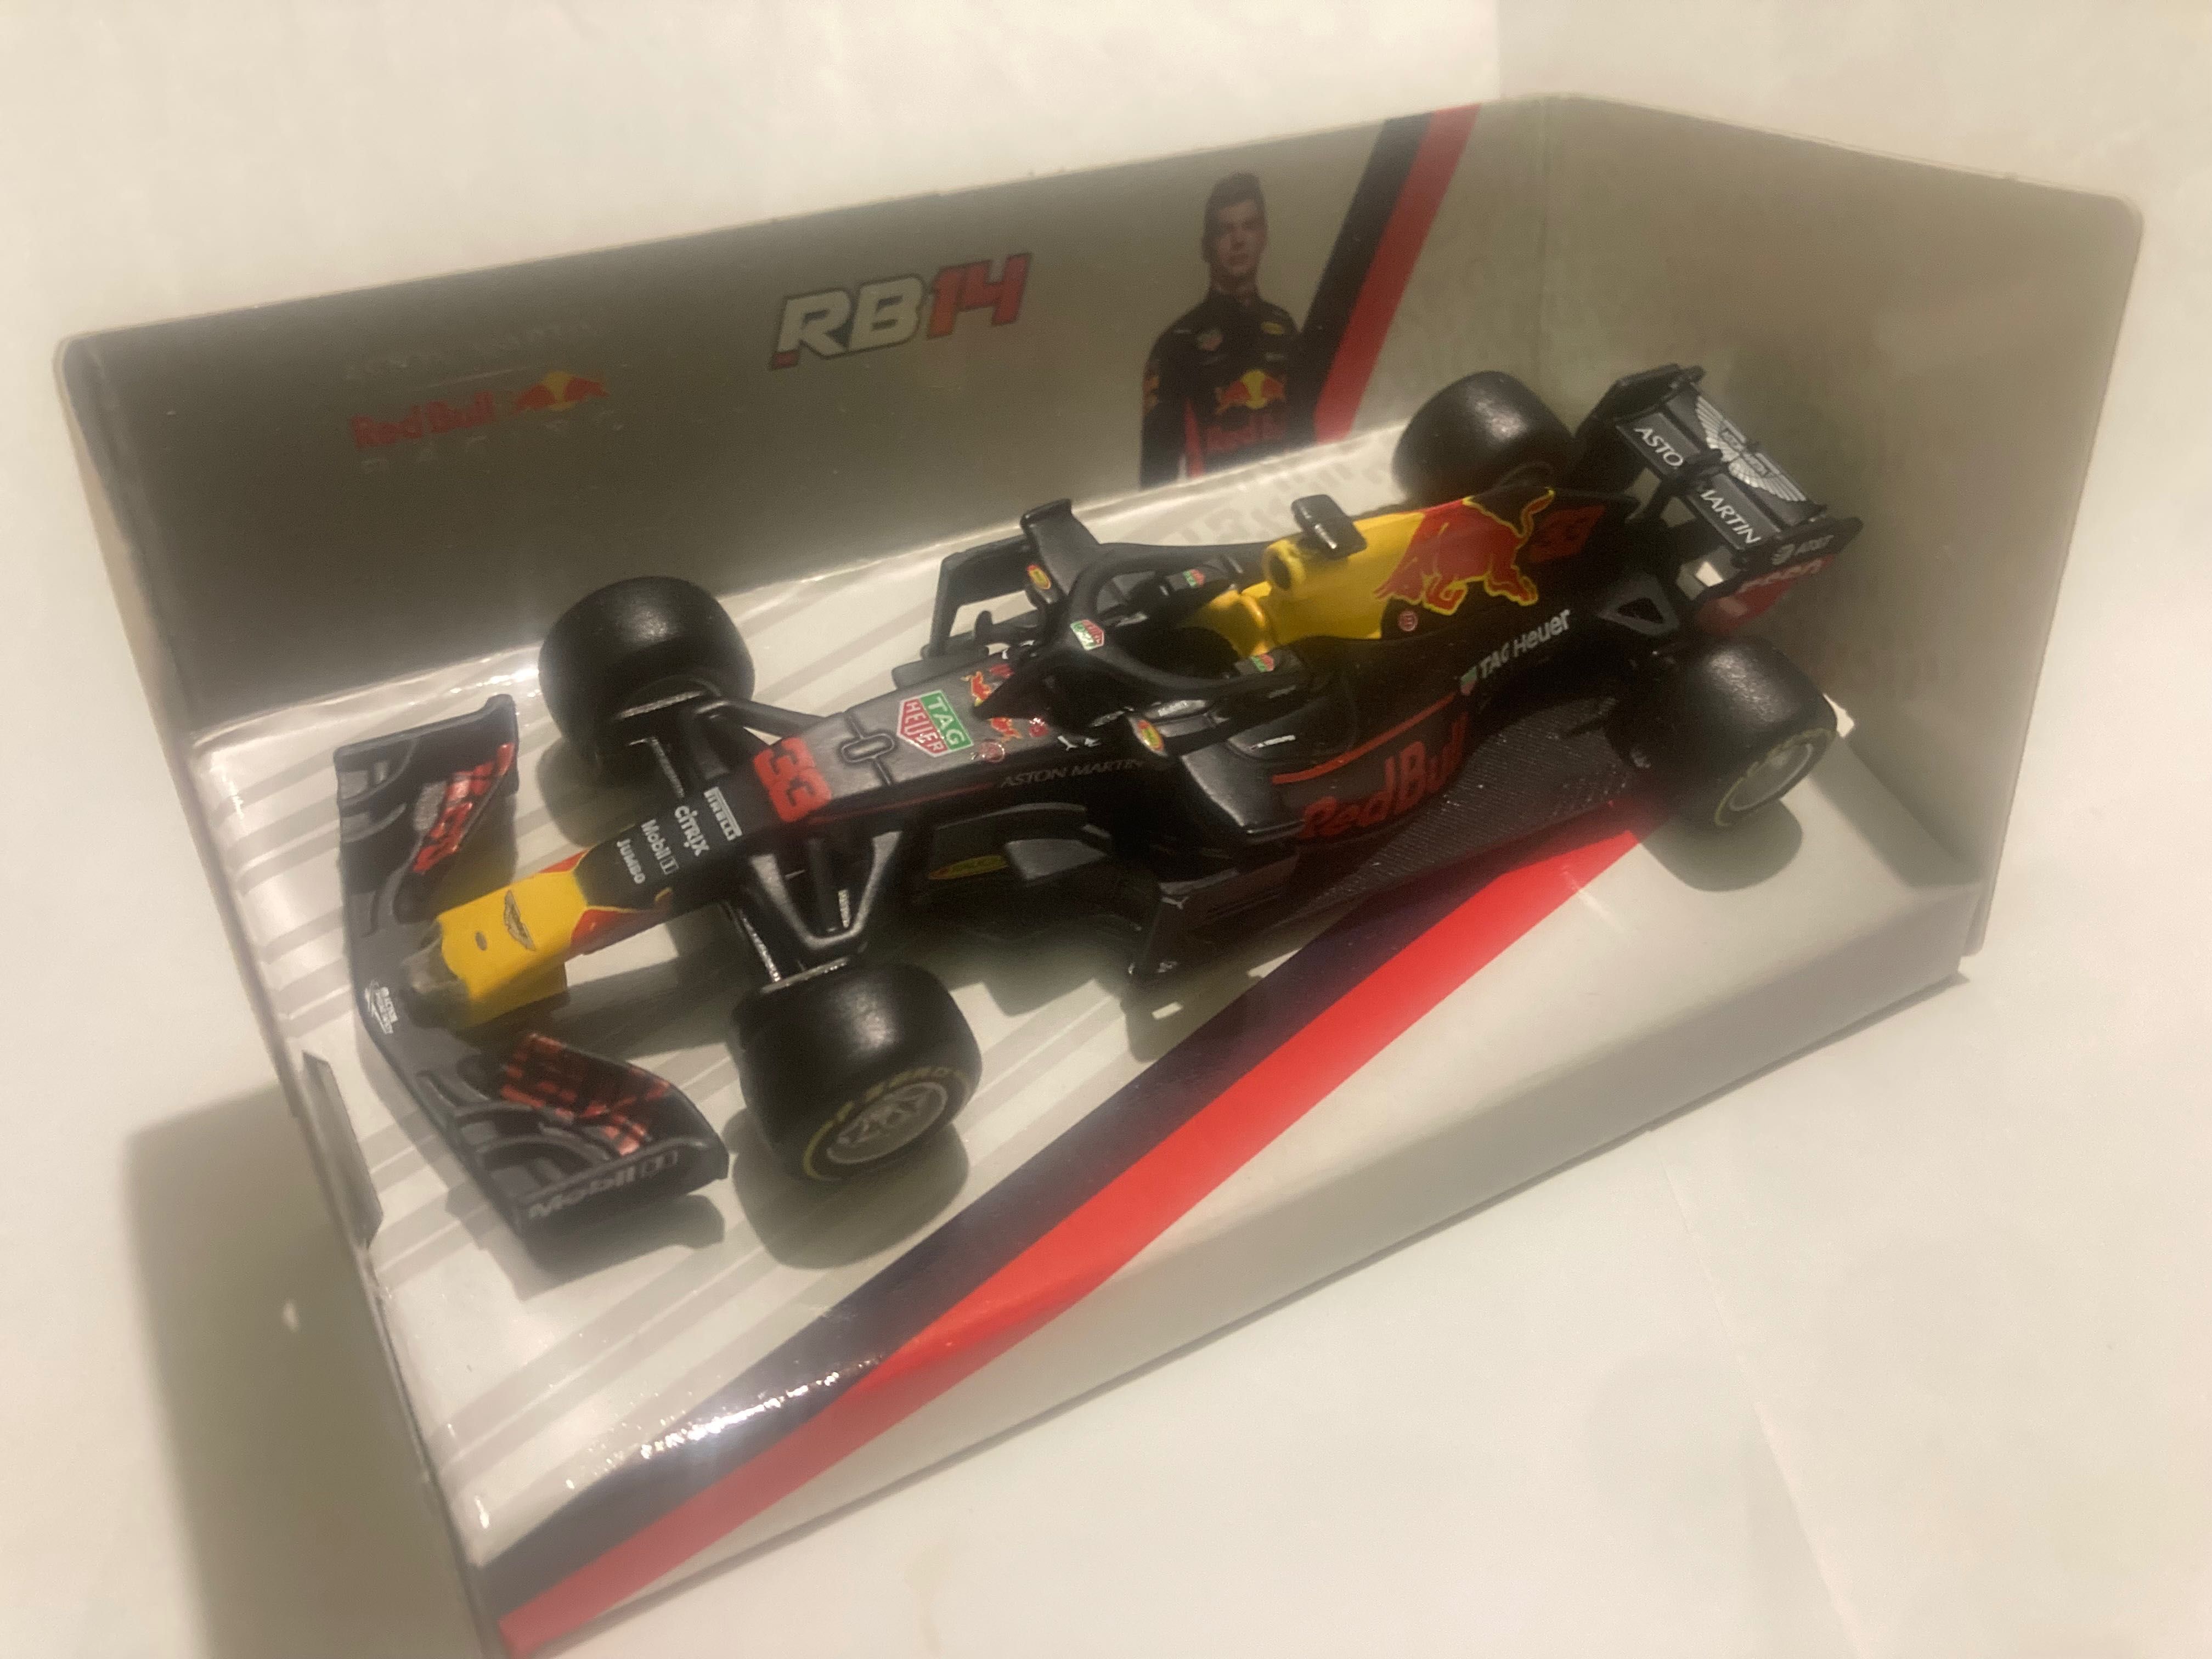 Формула 1 Ред Булл Rb14 2018. 
Макс Ферстаппен №33.